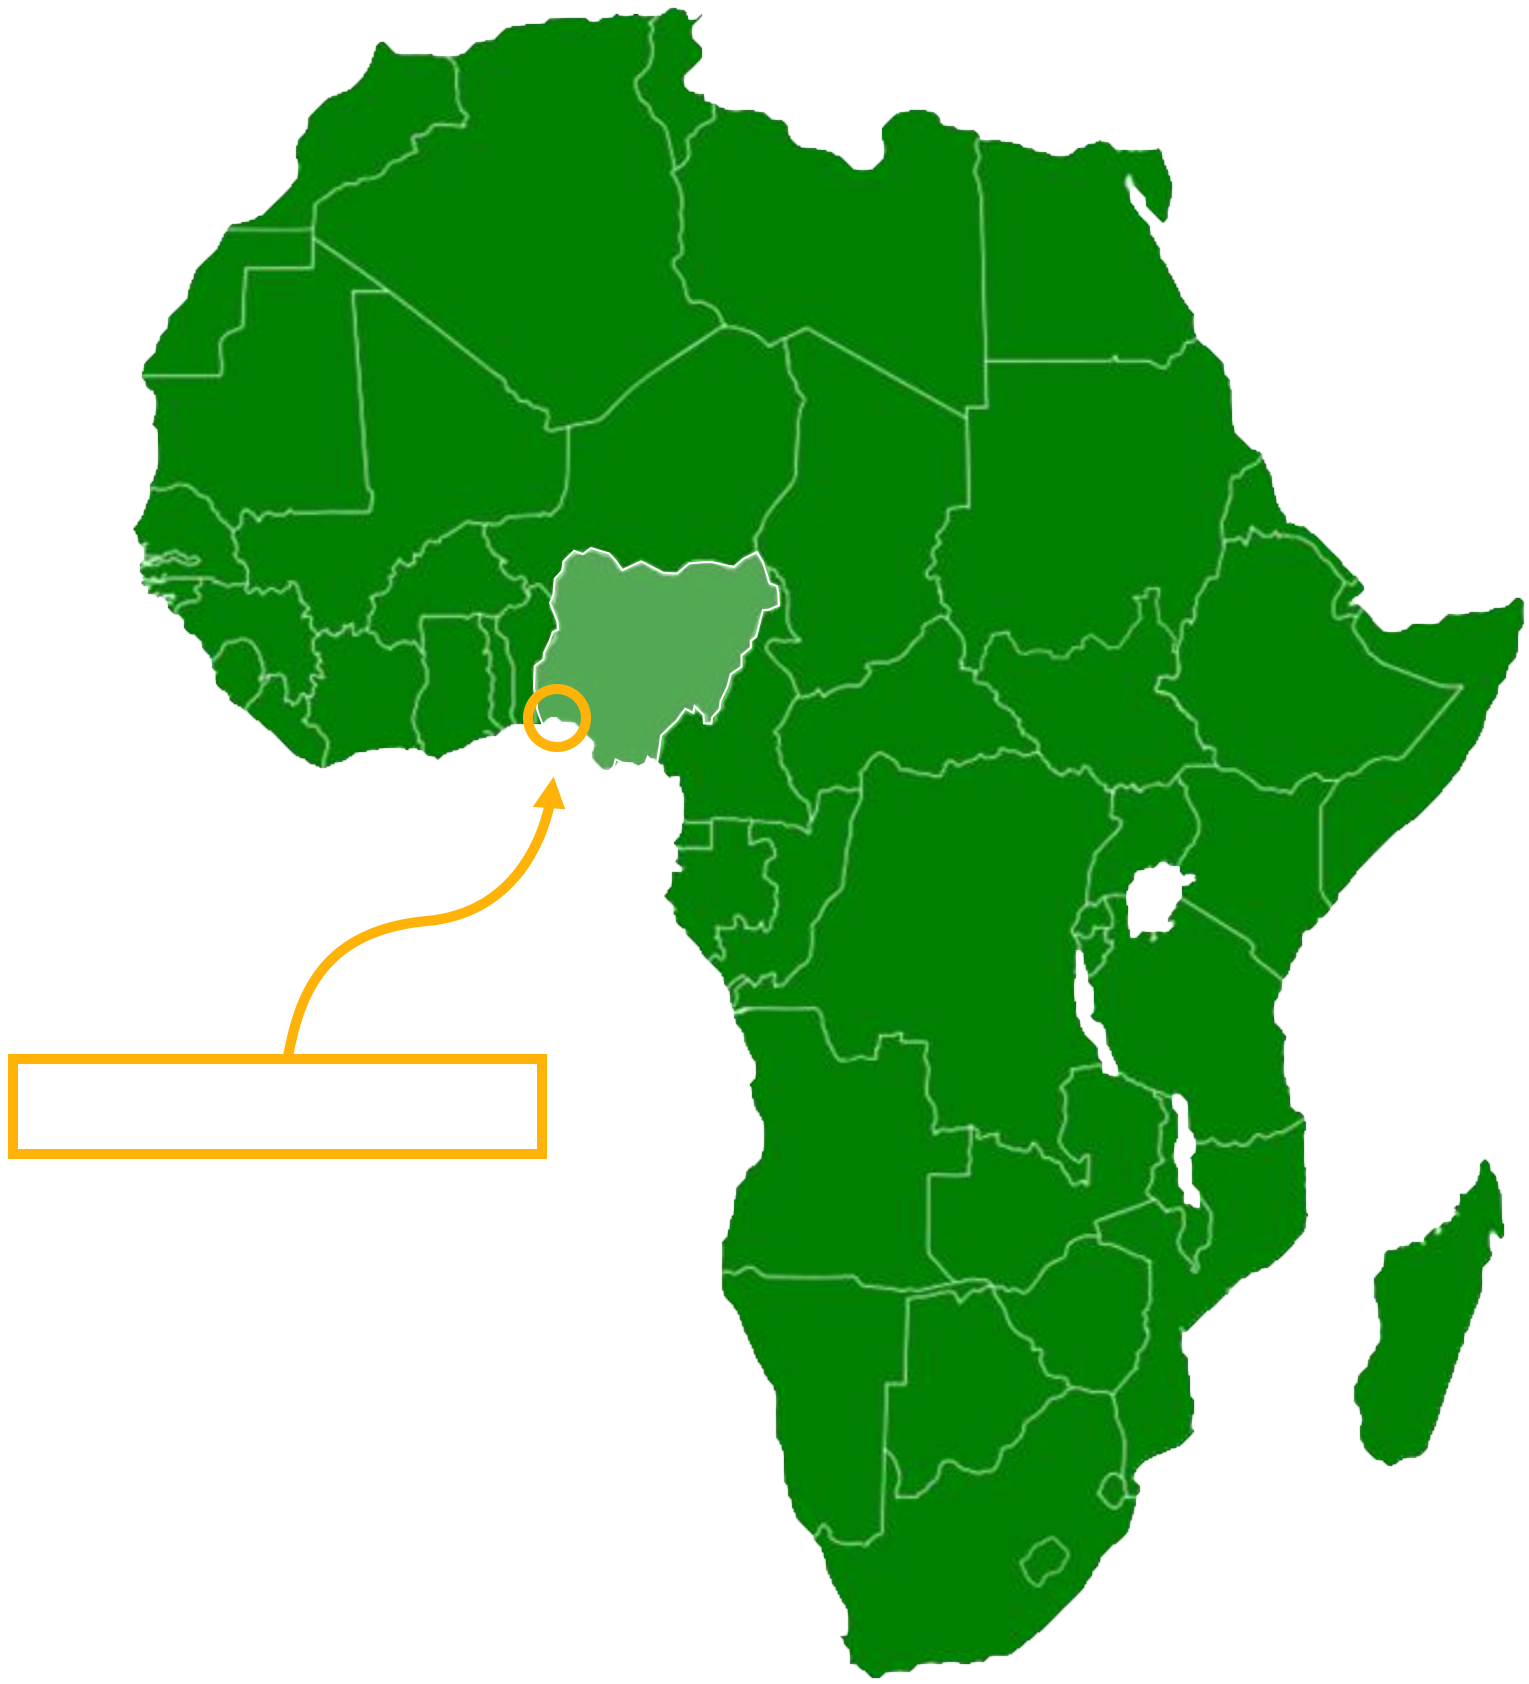 Africa-green-def-Nigeria-highlight